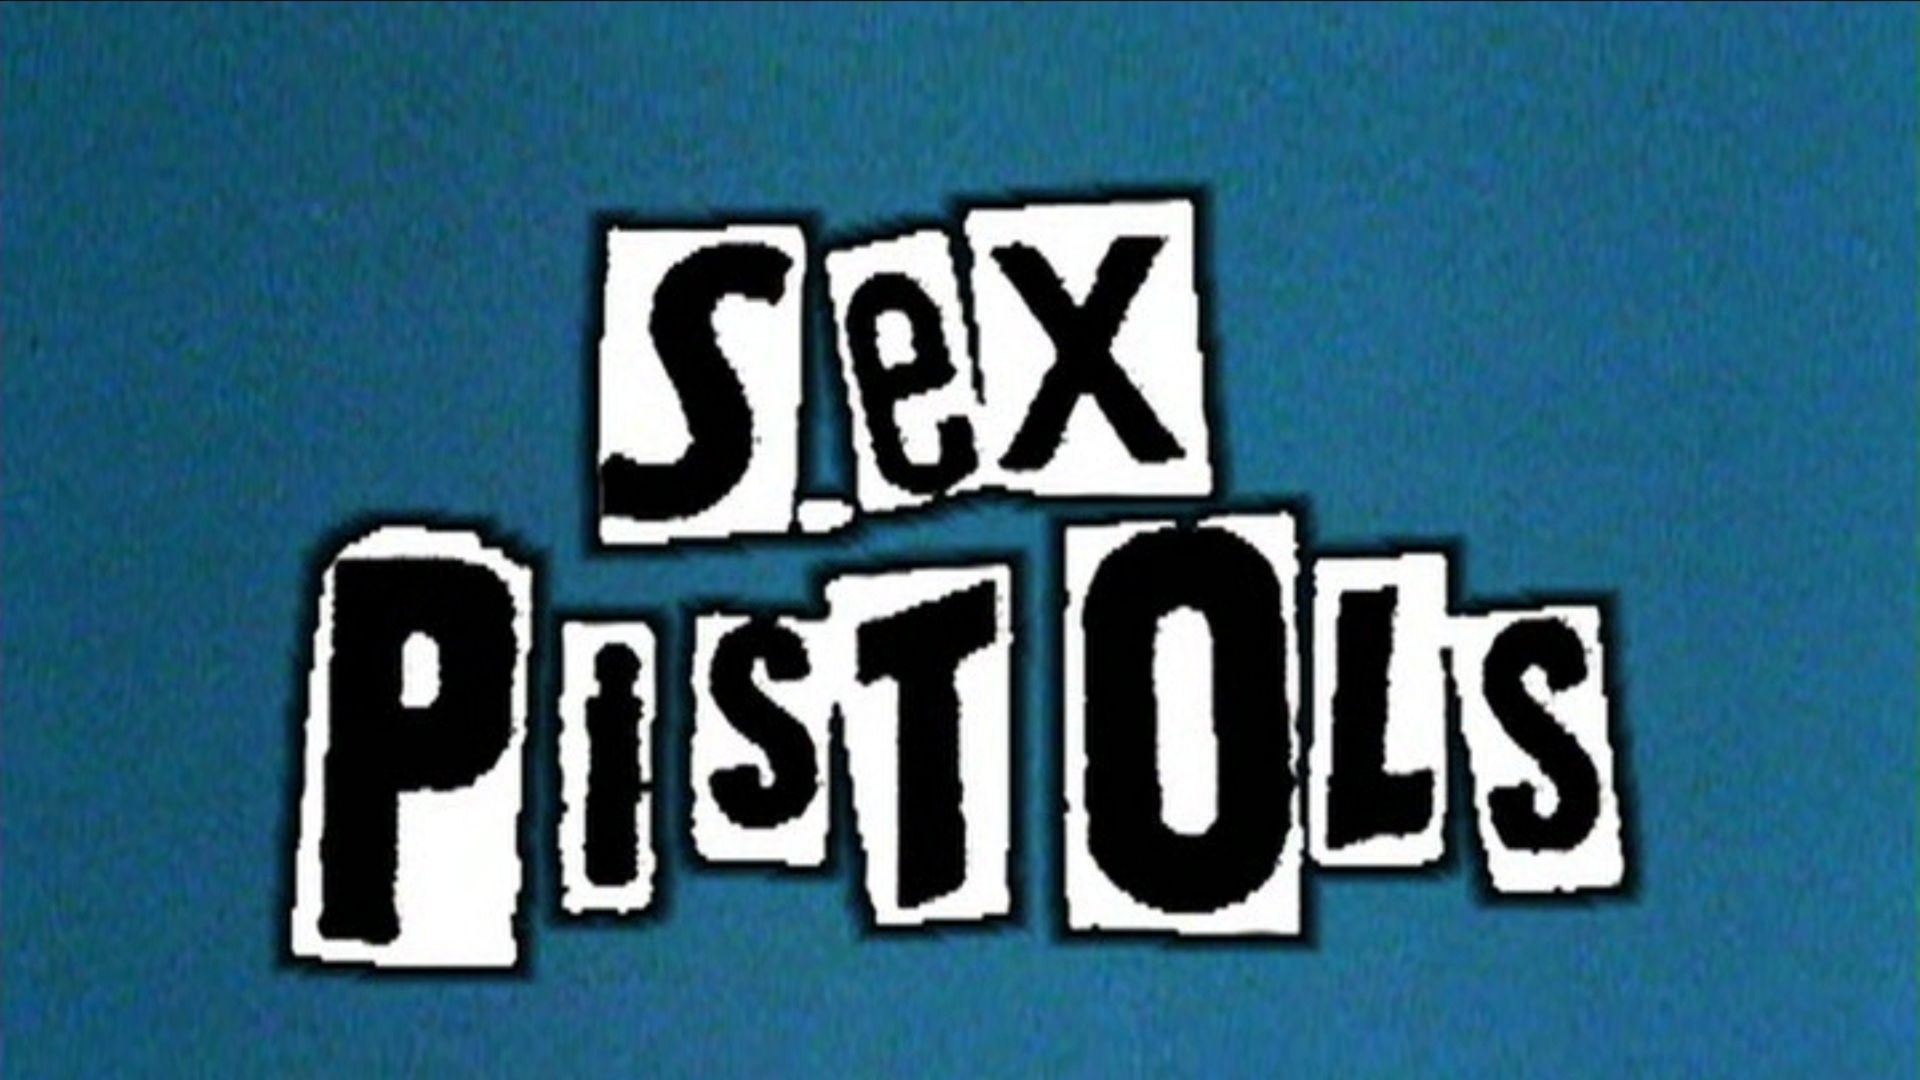 sex pistols, music